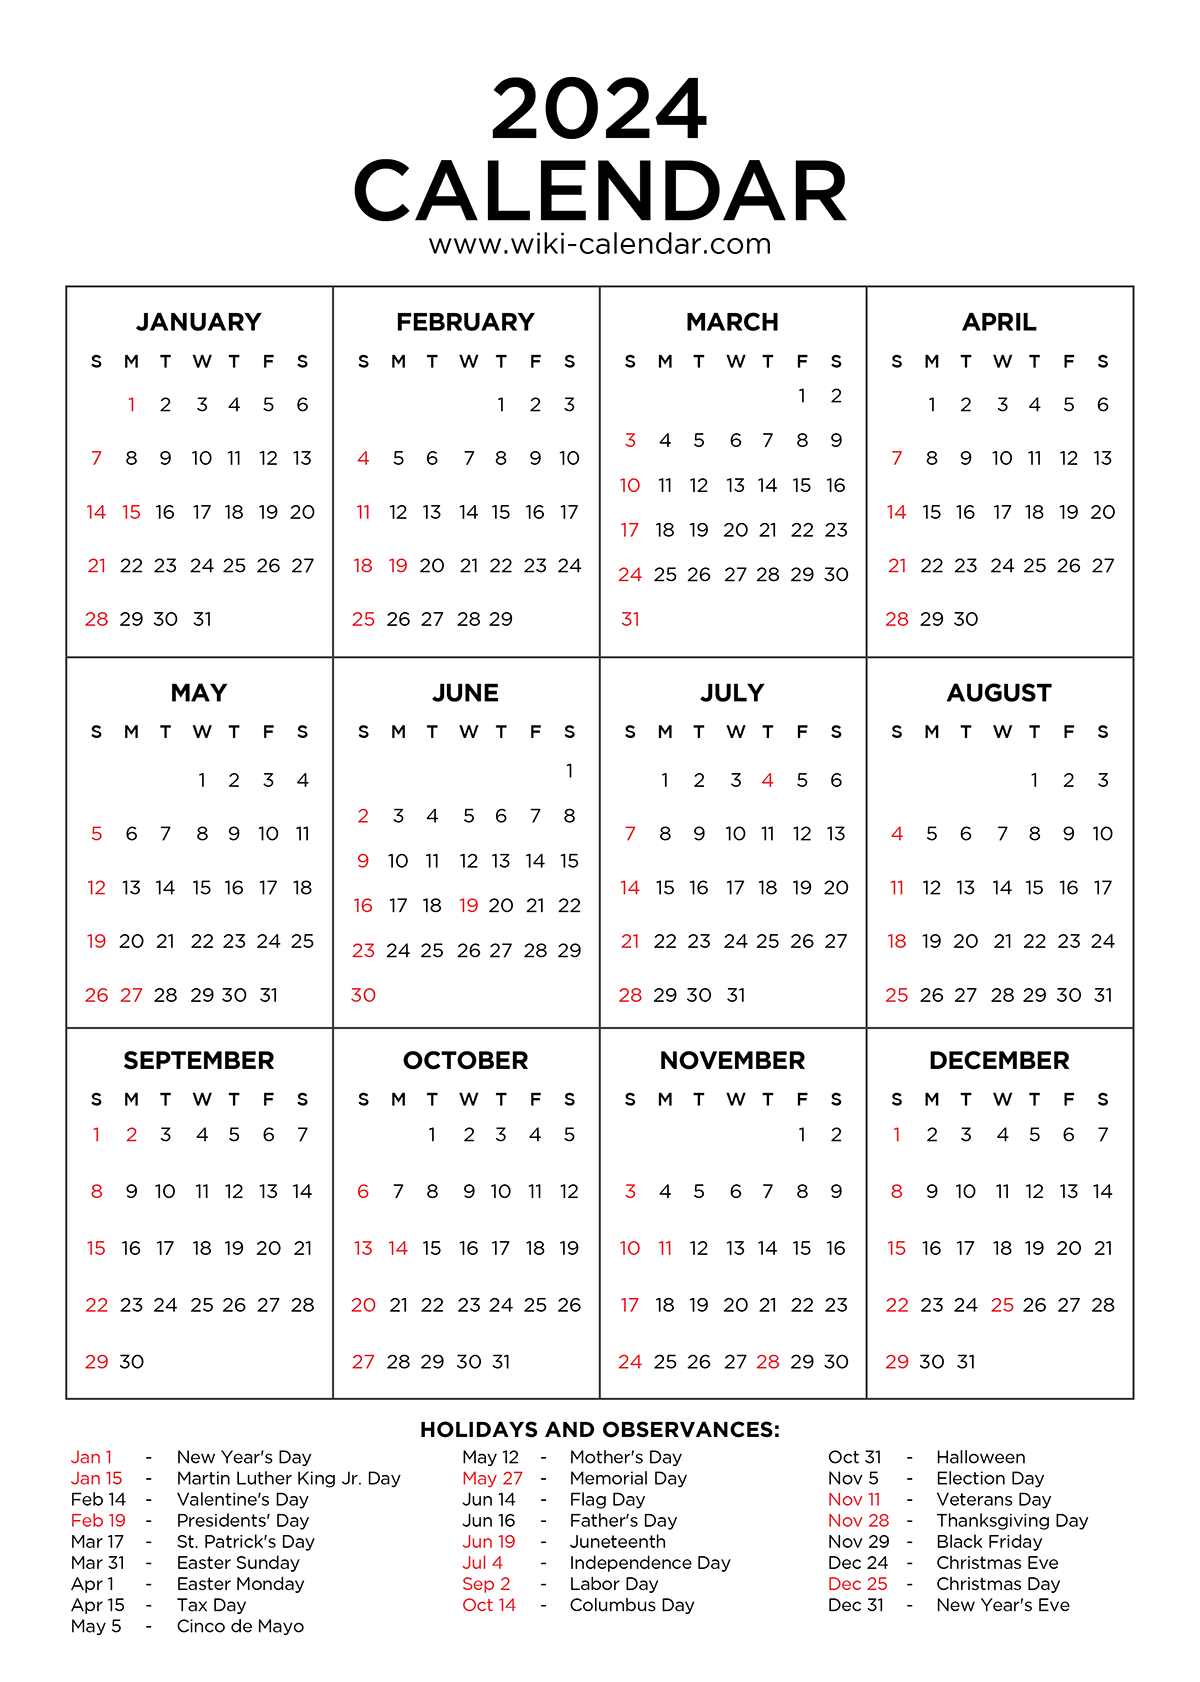 Year 2024 Calendar Printable With Holidays - Wiki Calendar | Printable Calendar 2024 Free With Holidays